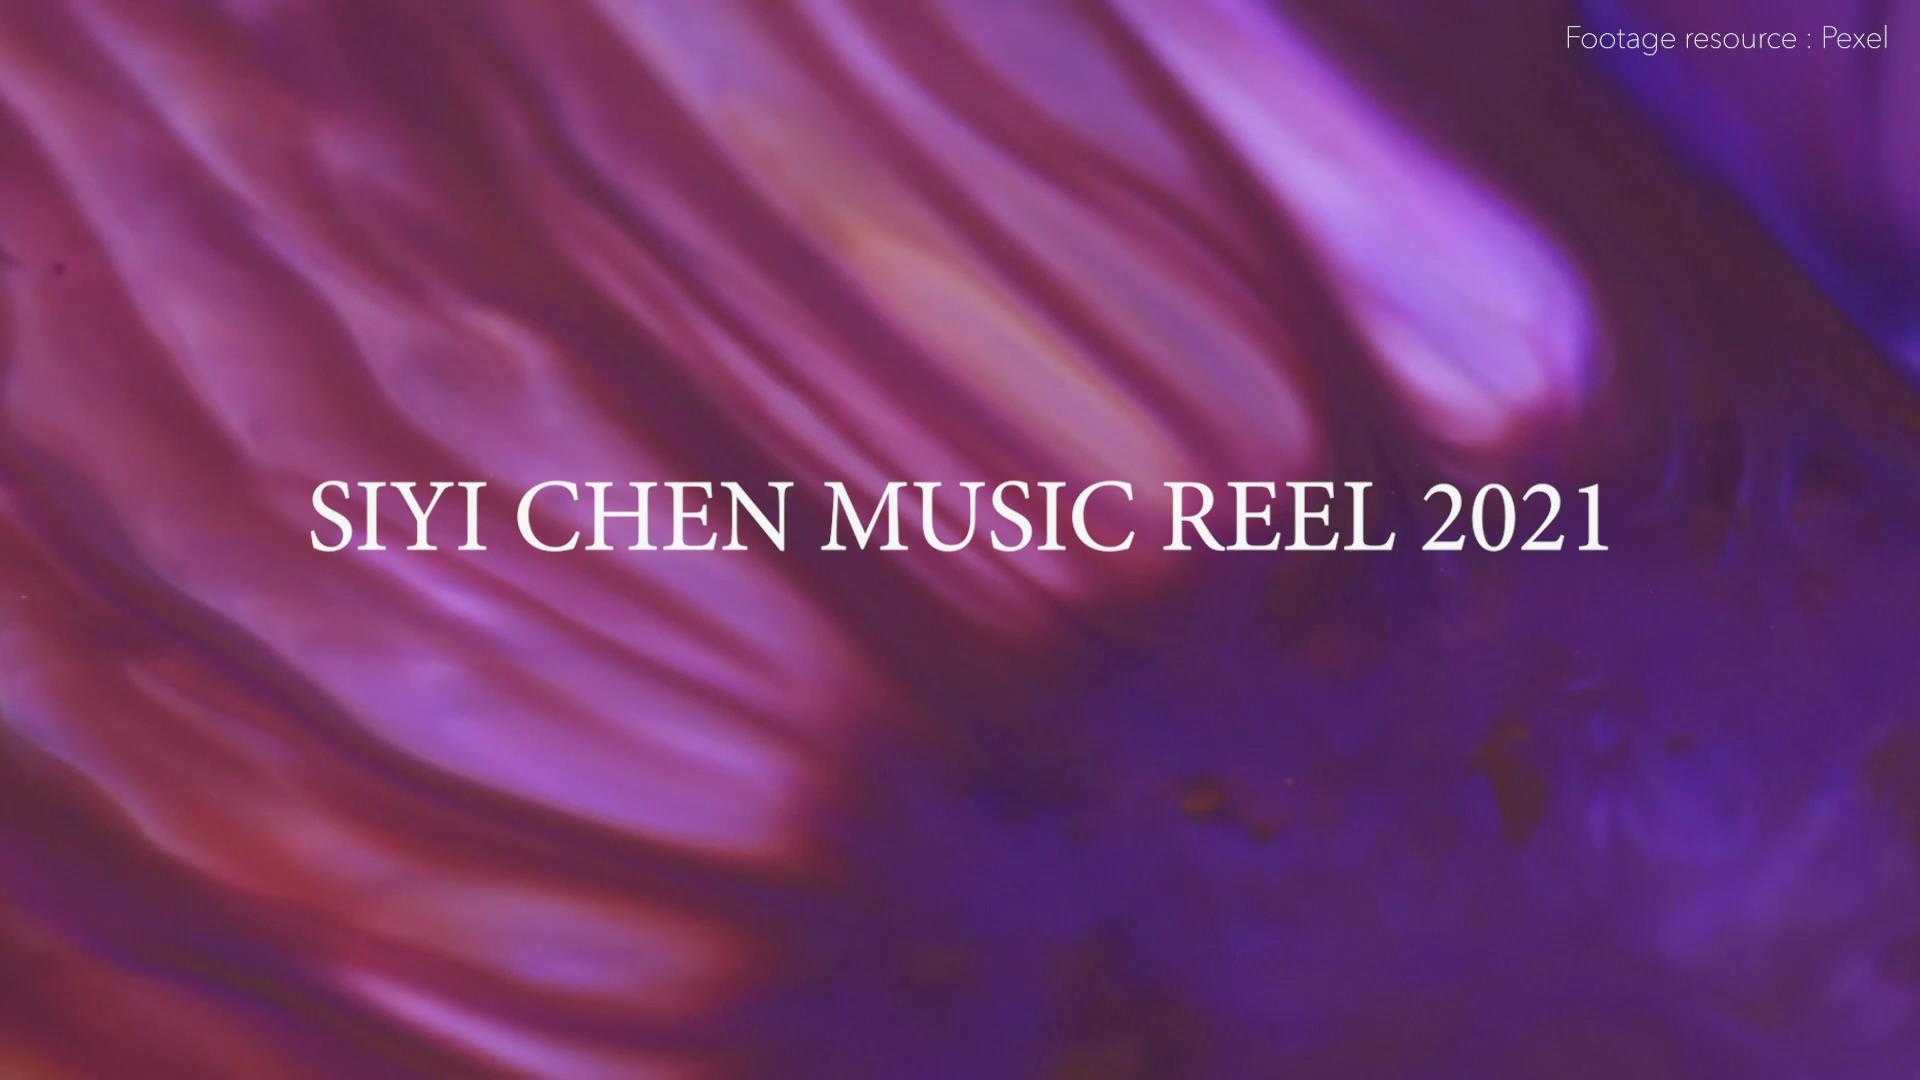 Siyi Chen Music Reel 2021